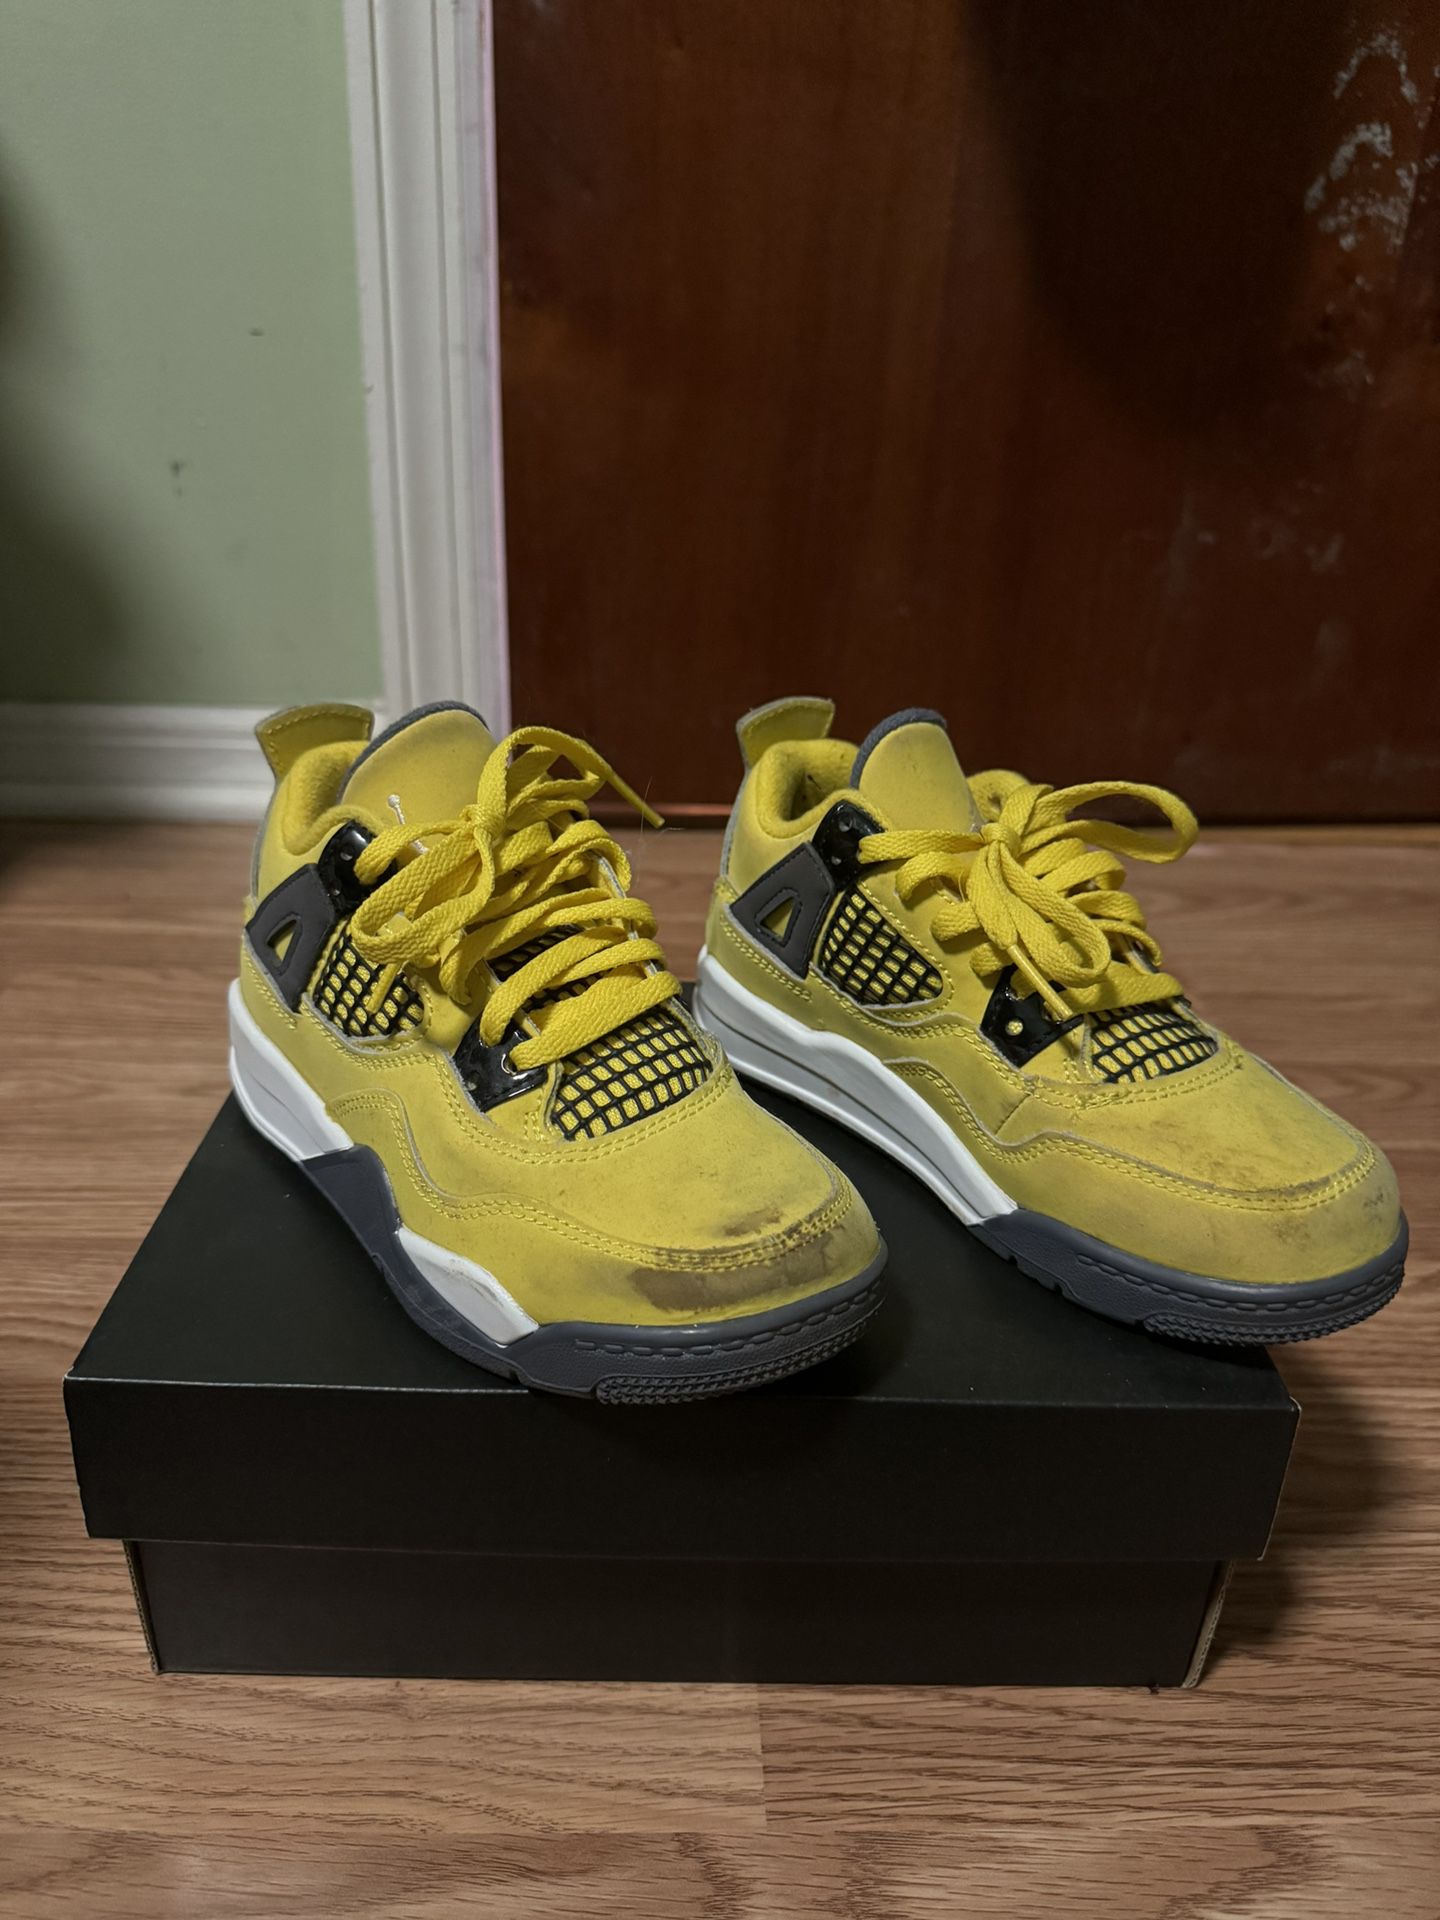 Nike Air Jordan Retro 4 Size 12c